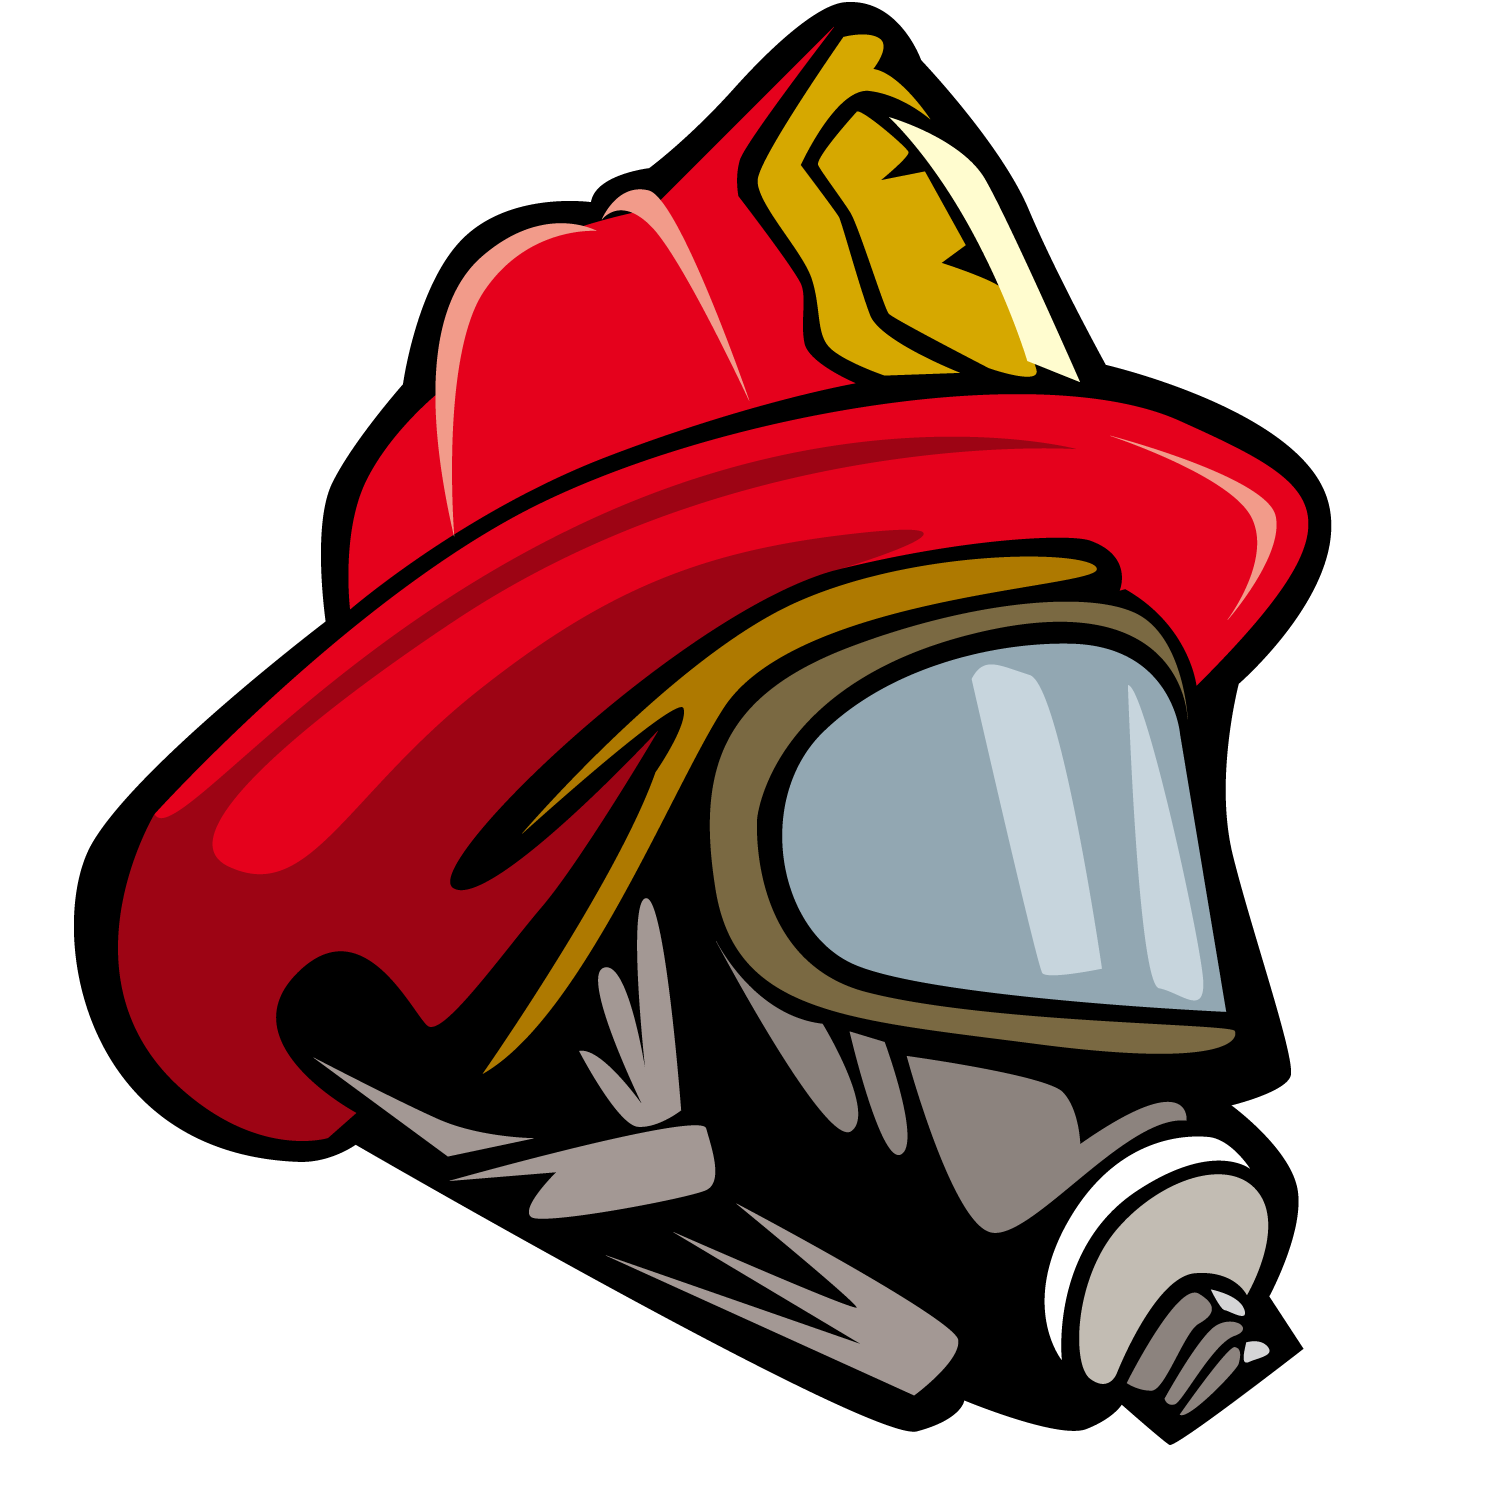 Fireman Helmet Drawing Firefighter Helmet Clipart Png Free Clipart My